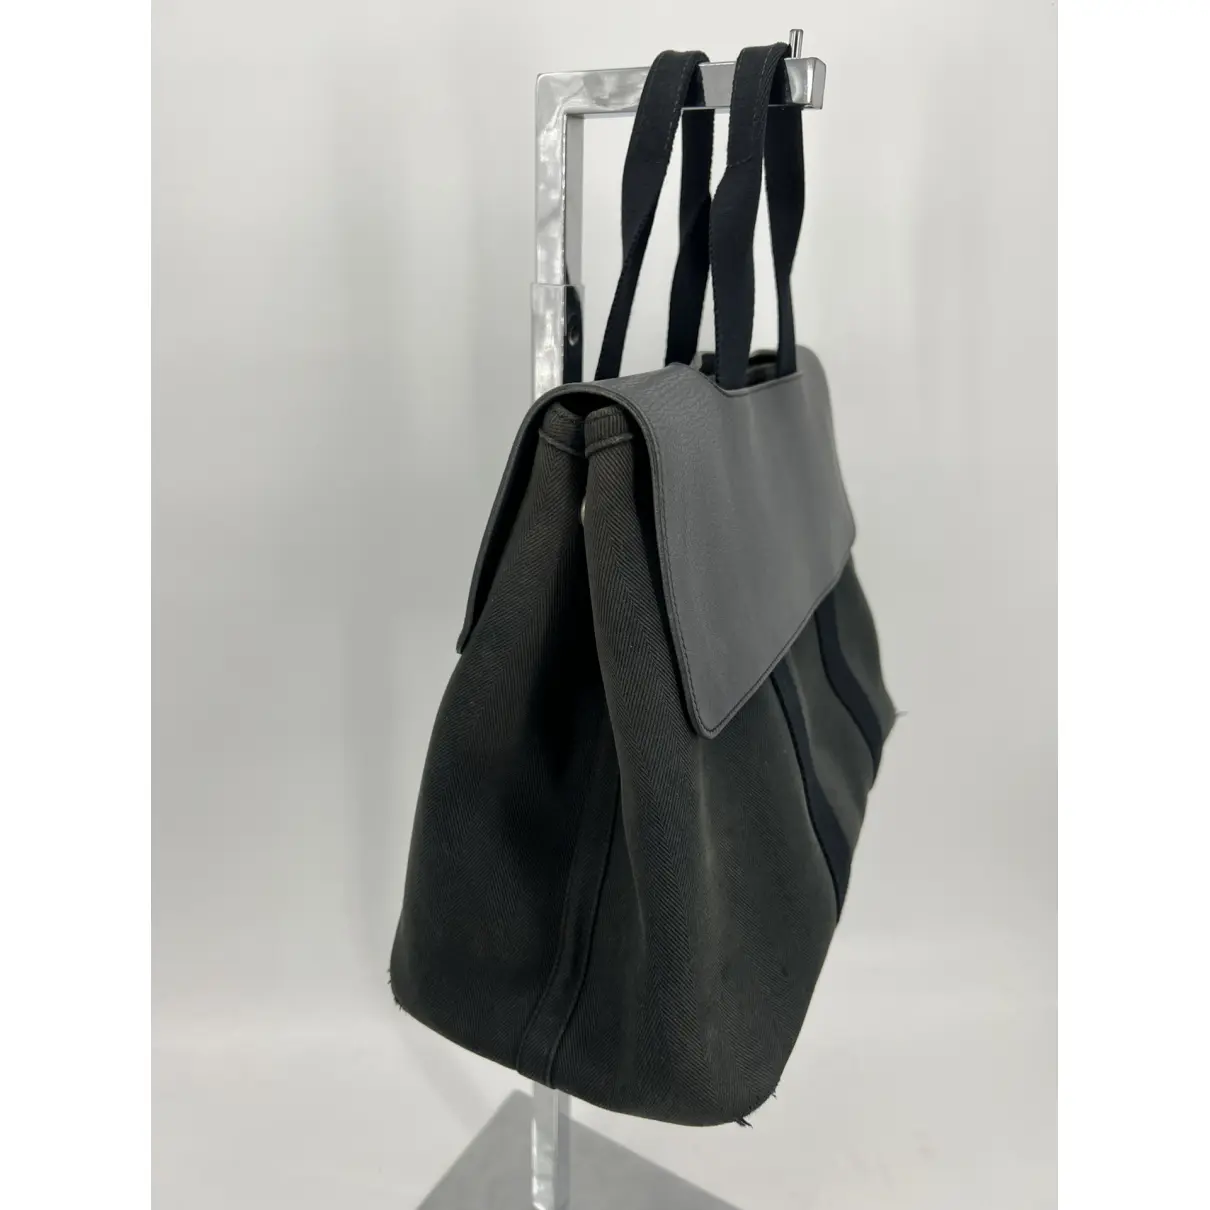 Buy Hermès Cloth satchel online